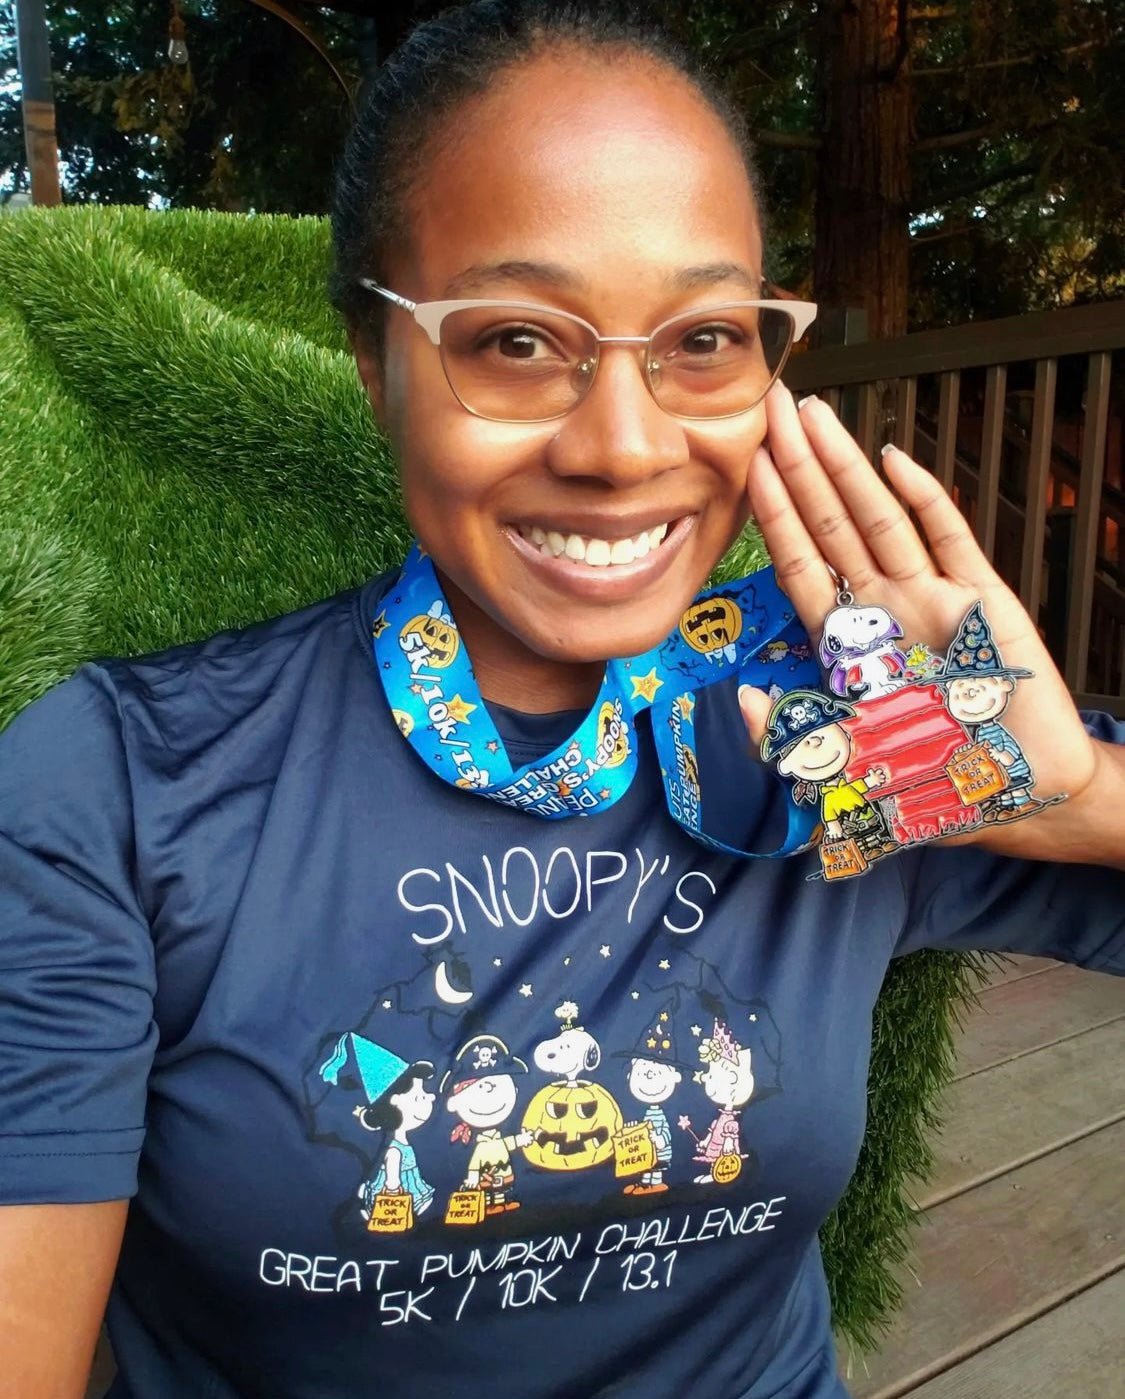 Snoopy's Great Pumpkin Challenge: Vol. #1 Finisher Medal-Medal Dash